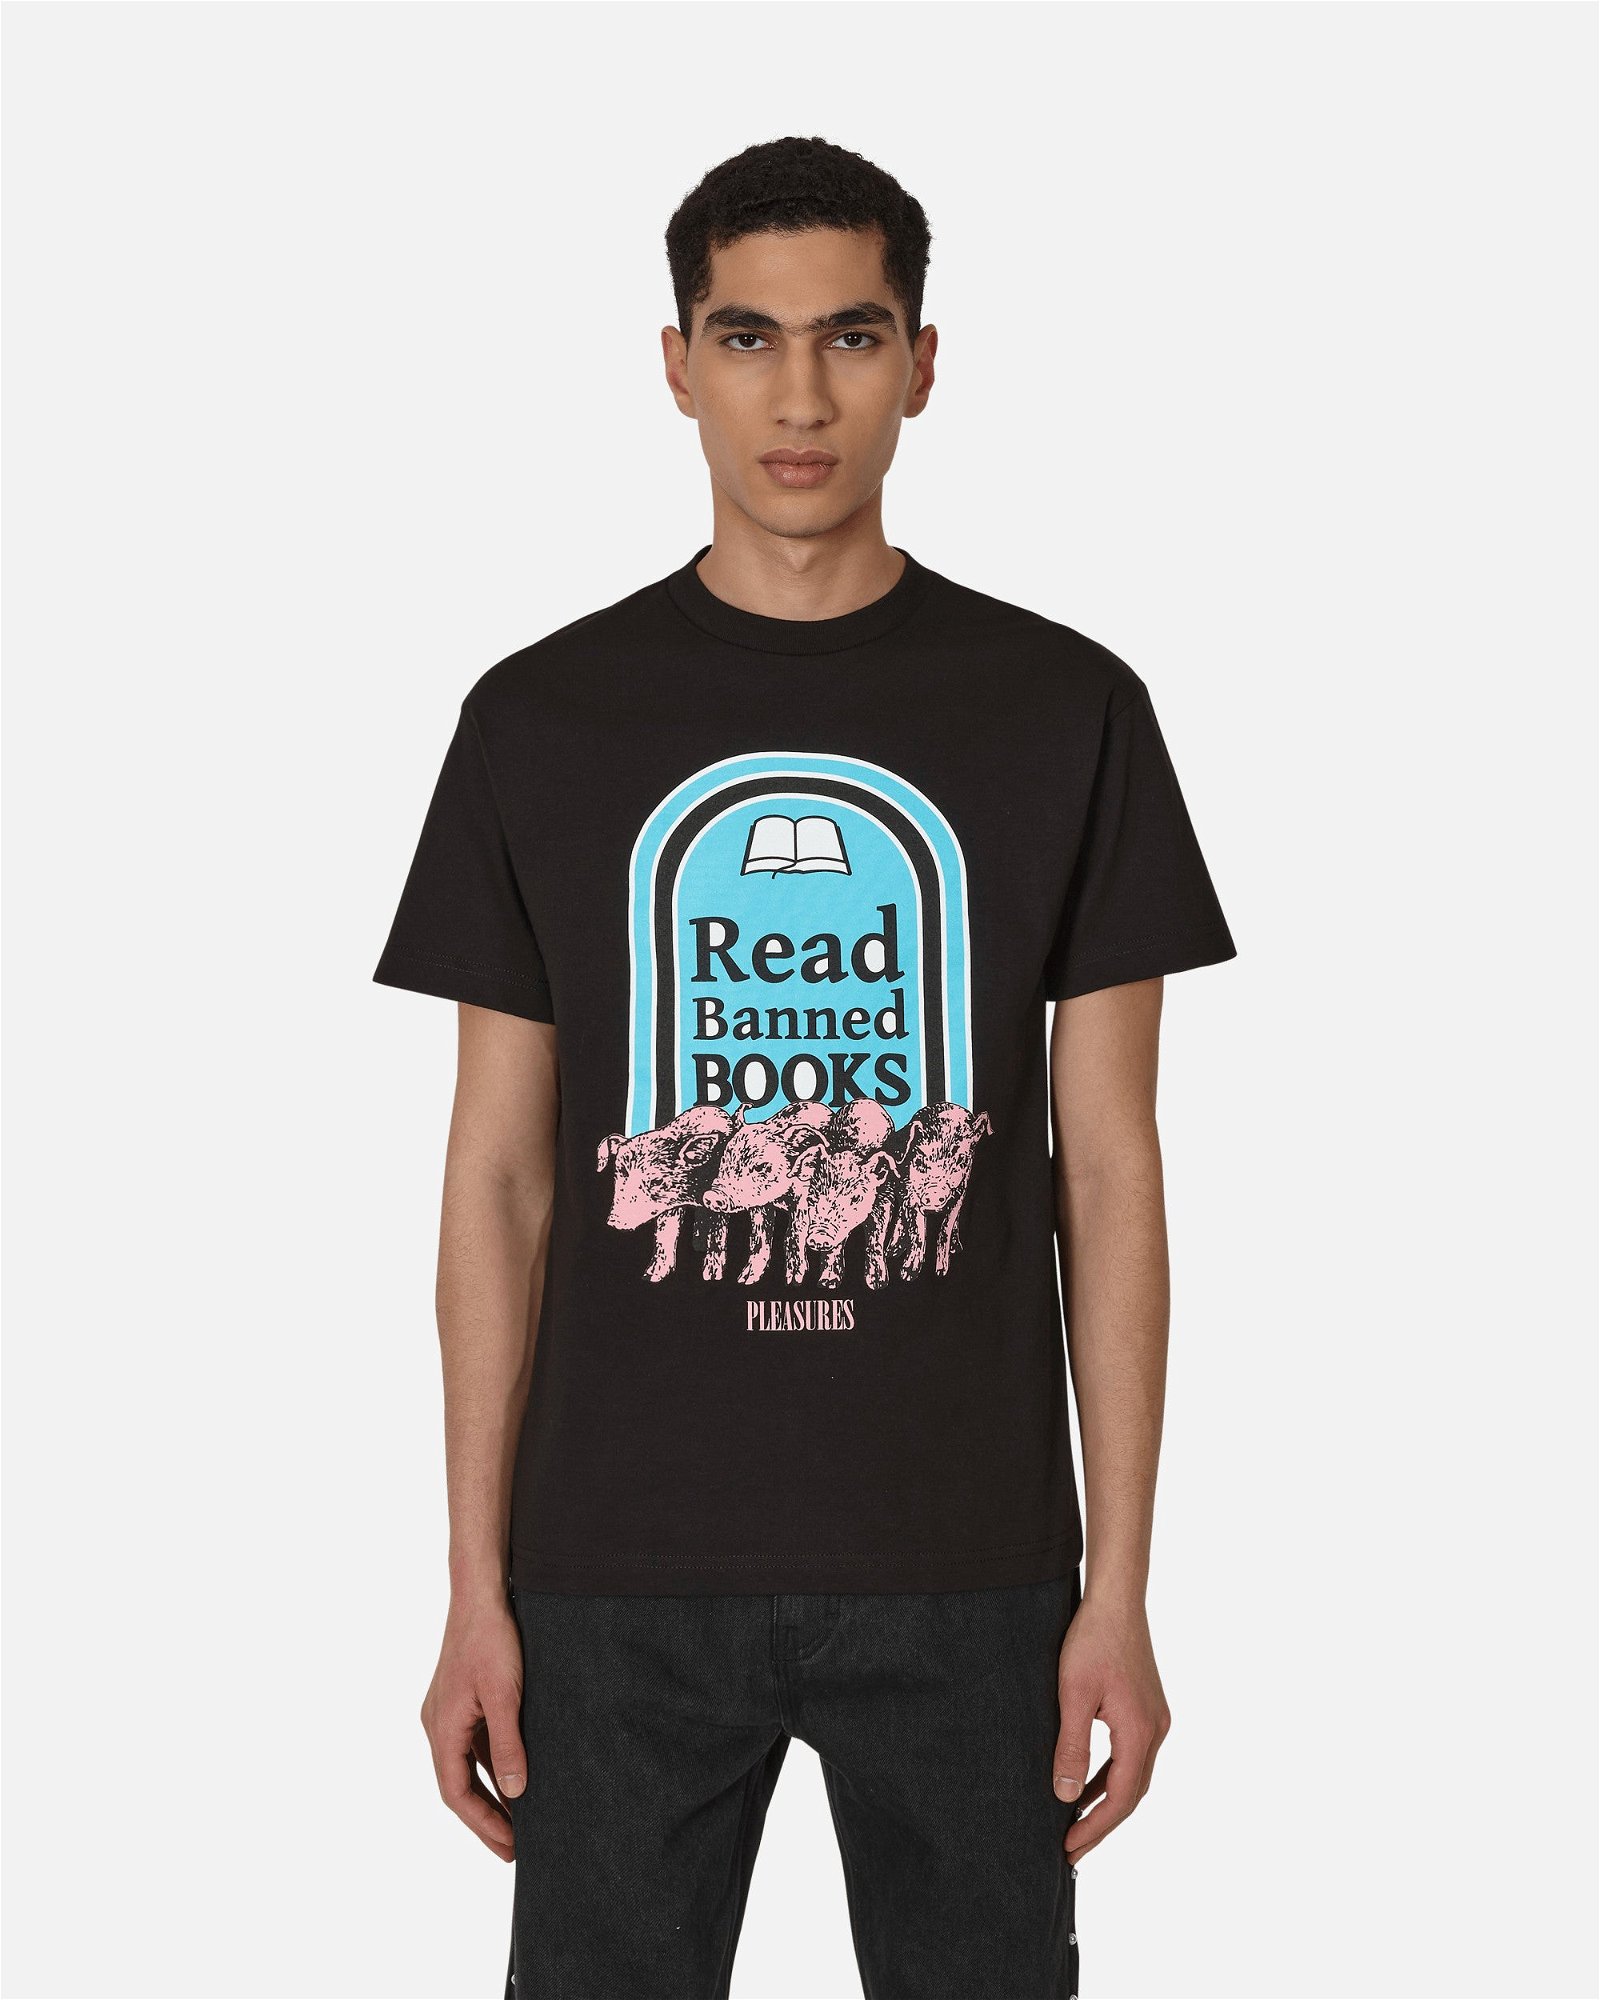 Pleasures Banned Books T-Shirt